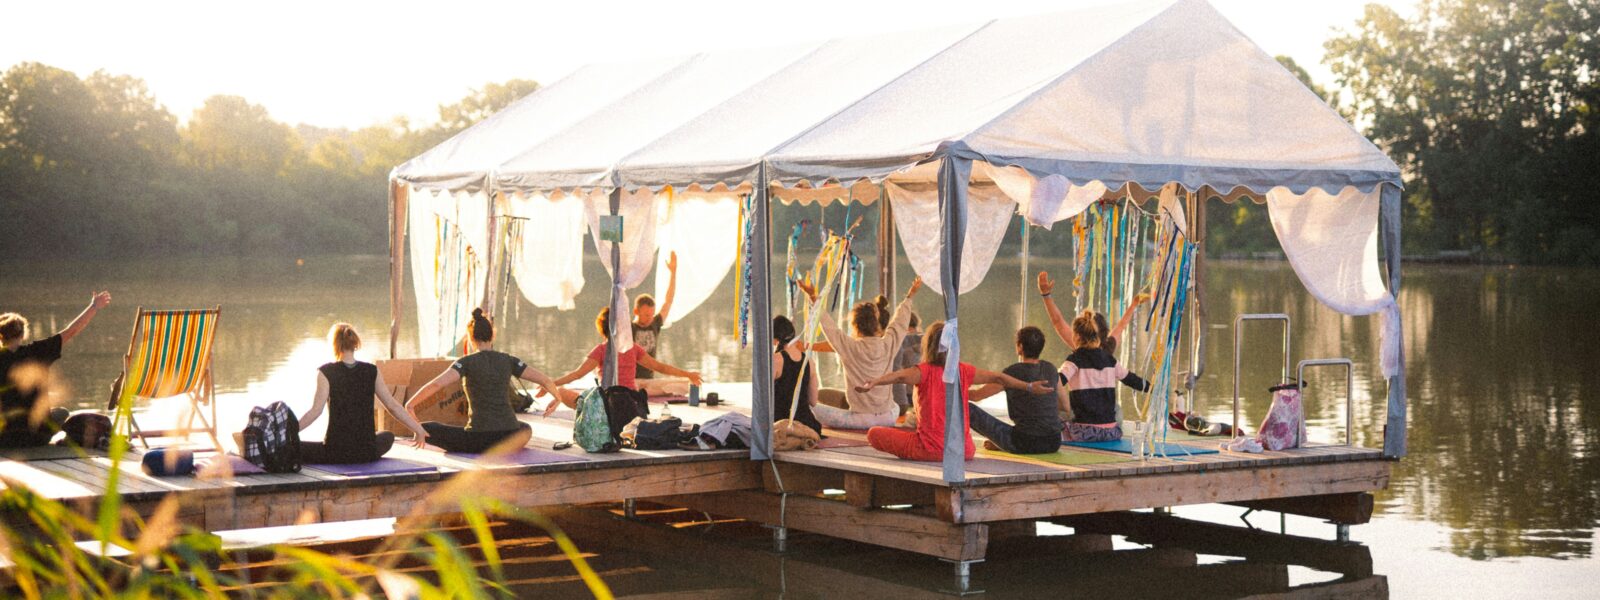 yoga-class-by-the-river-yoga-retreats-yoga-travel